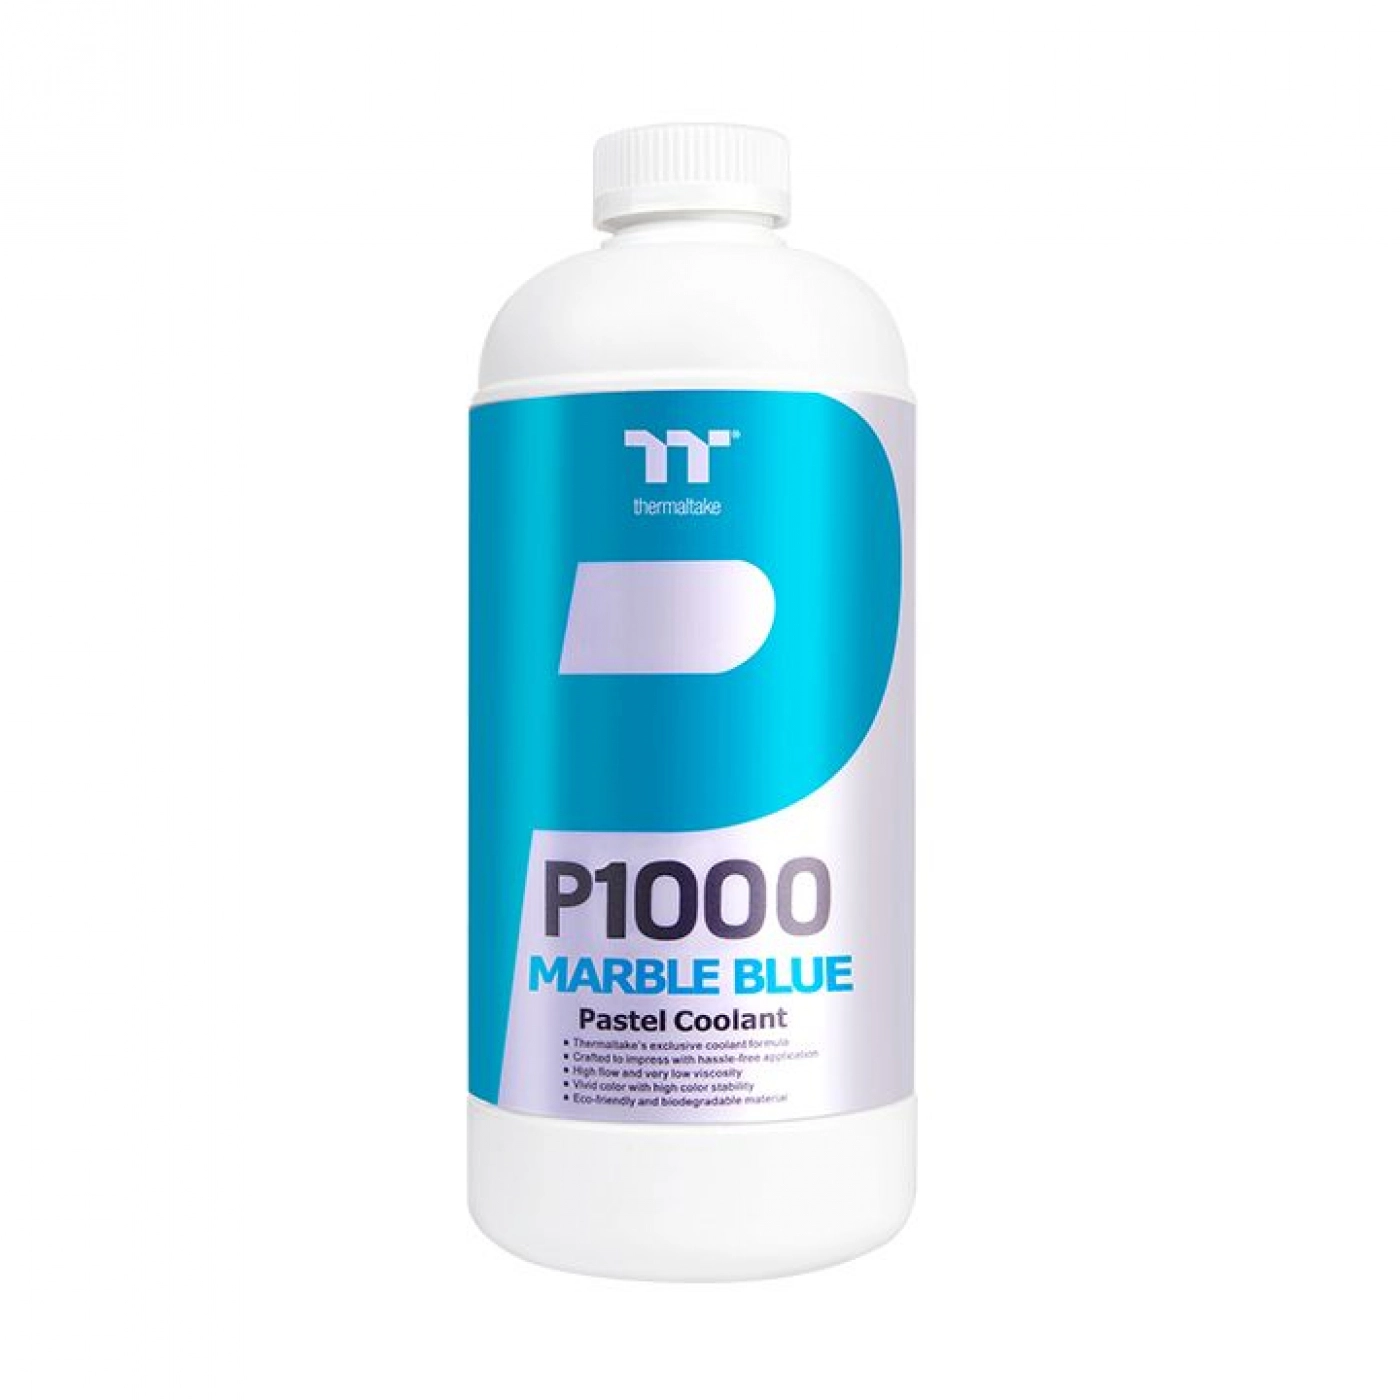 Купить Охлаждающая жидкость Thermaltake P1000 Pastel Coolant - Marble Blue (CL-W246-OS00MB-A) - фото 1